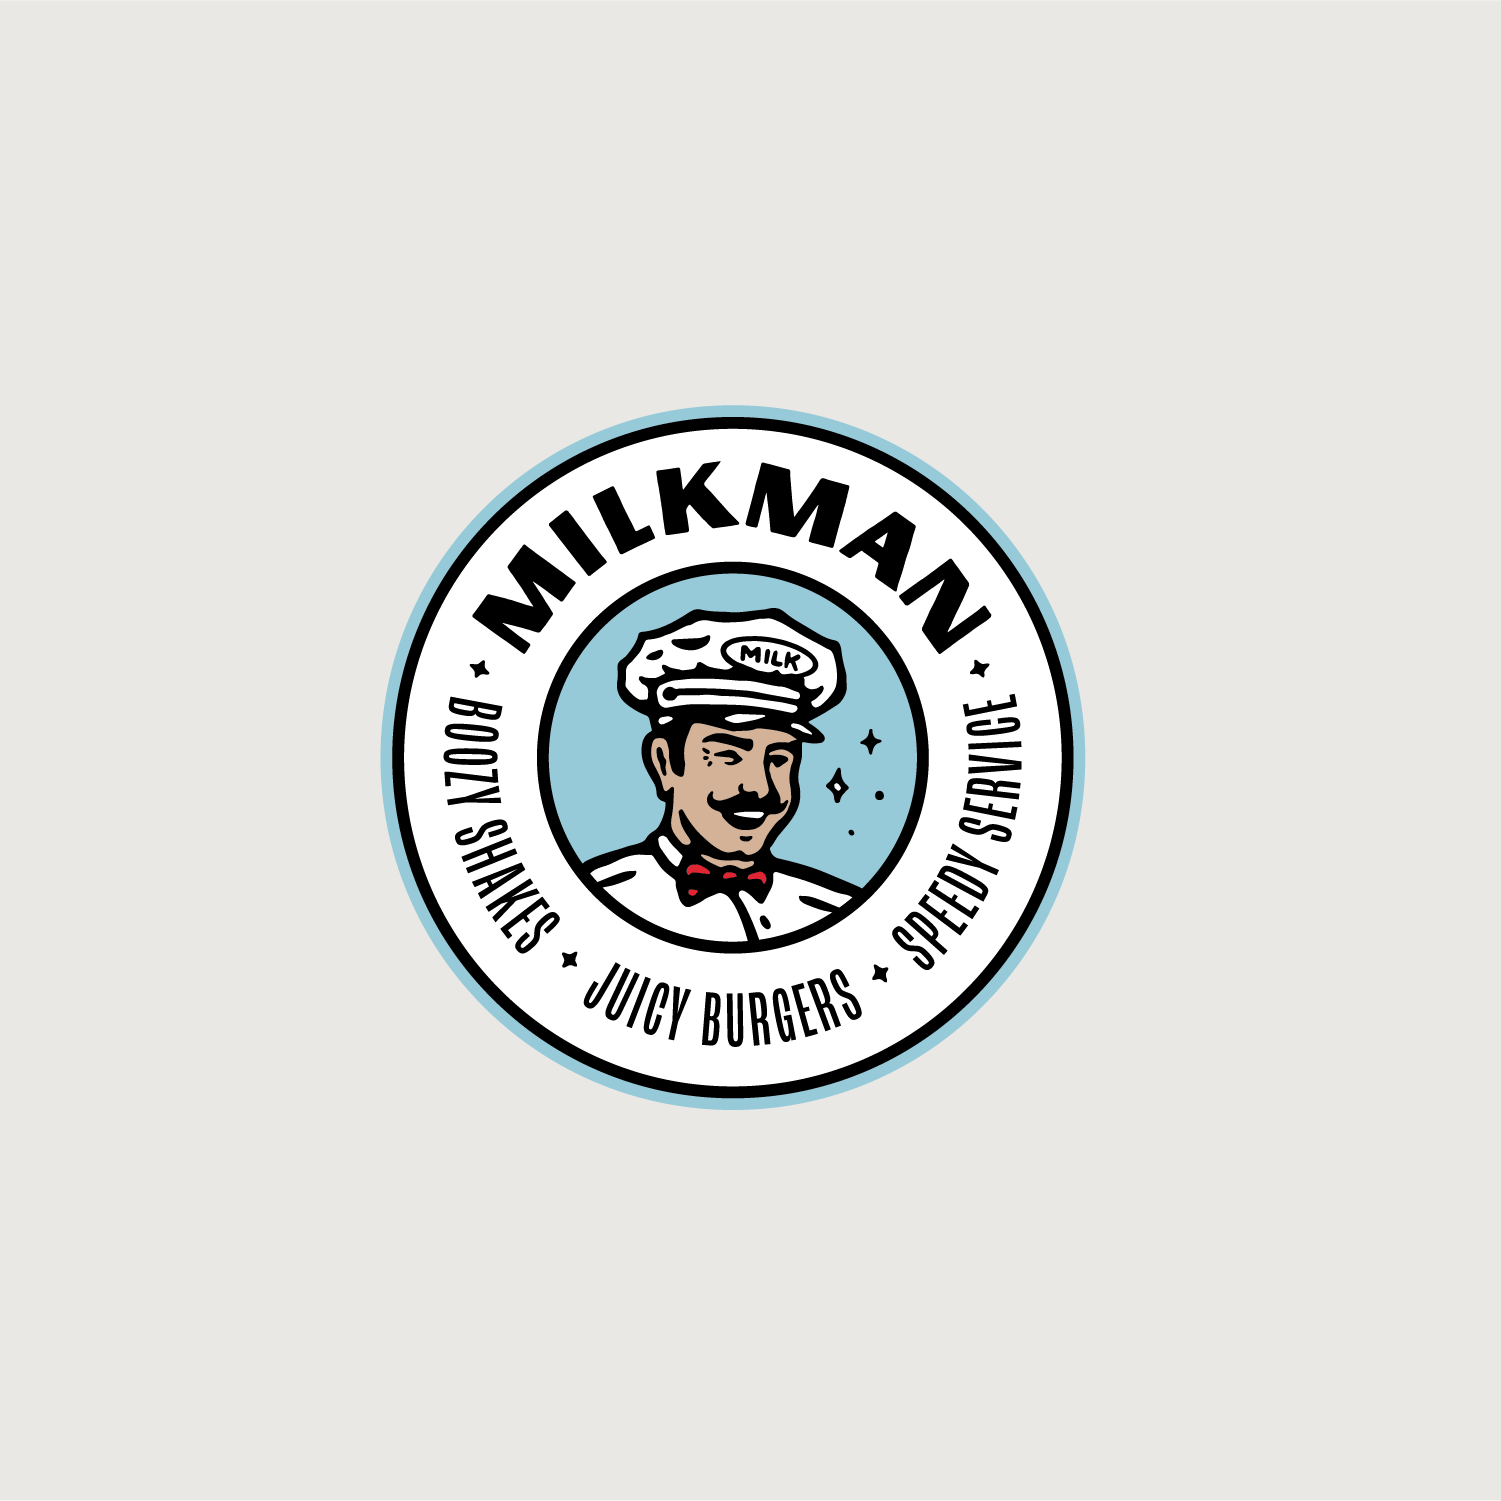 VS.Website.Logos.02a_Milkman-crest.png